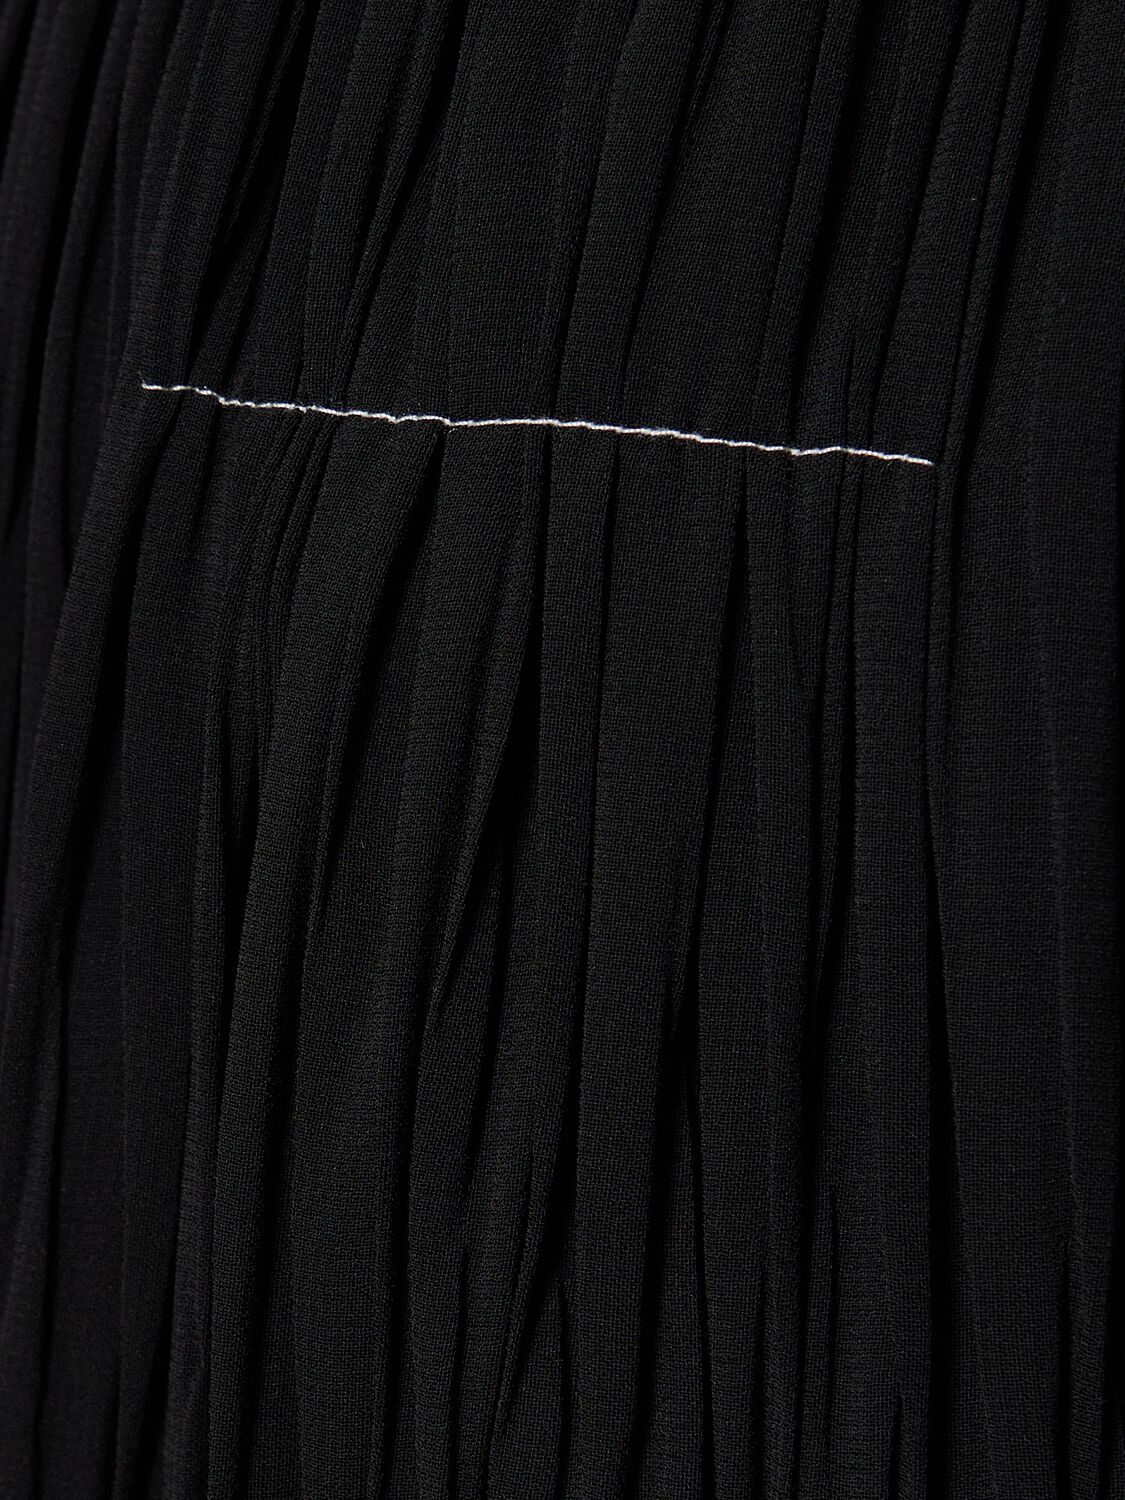 Shop Mm6 Maison Margiela Pleated Long Skirt In Black